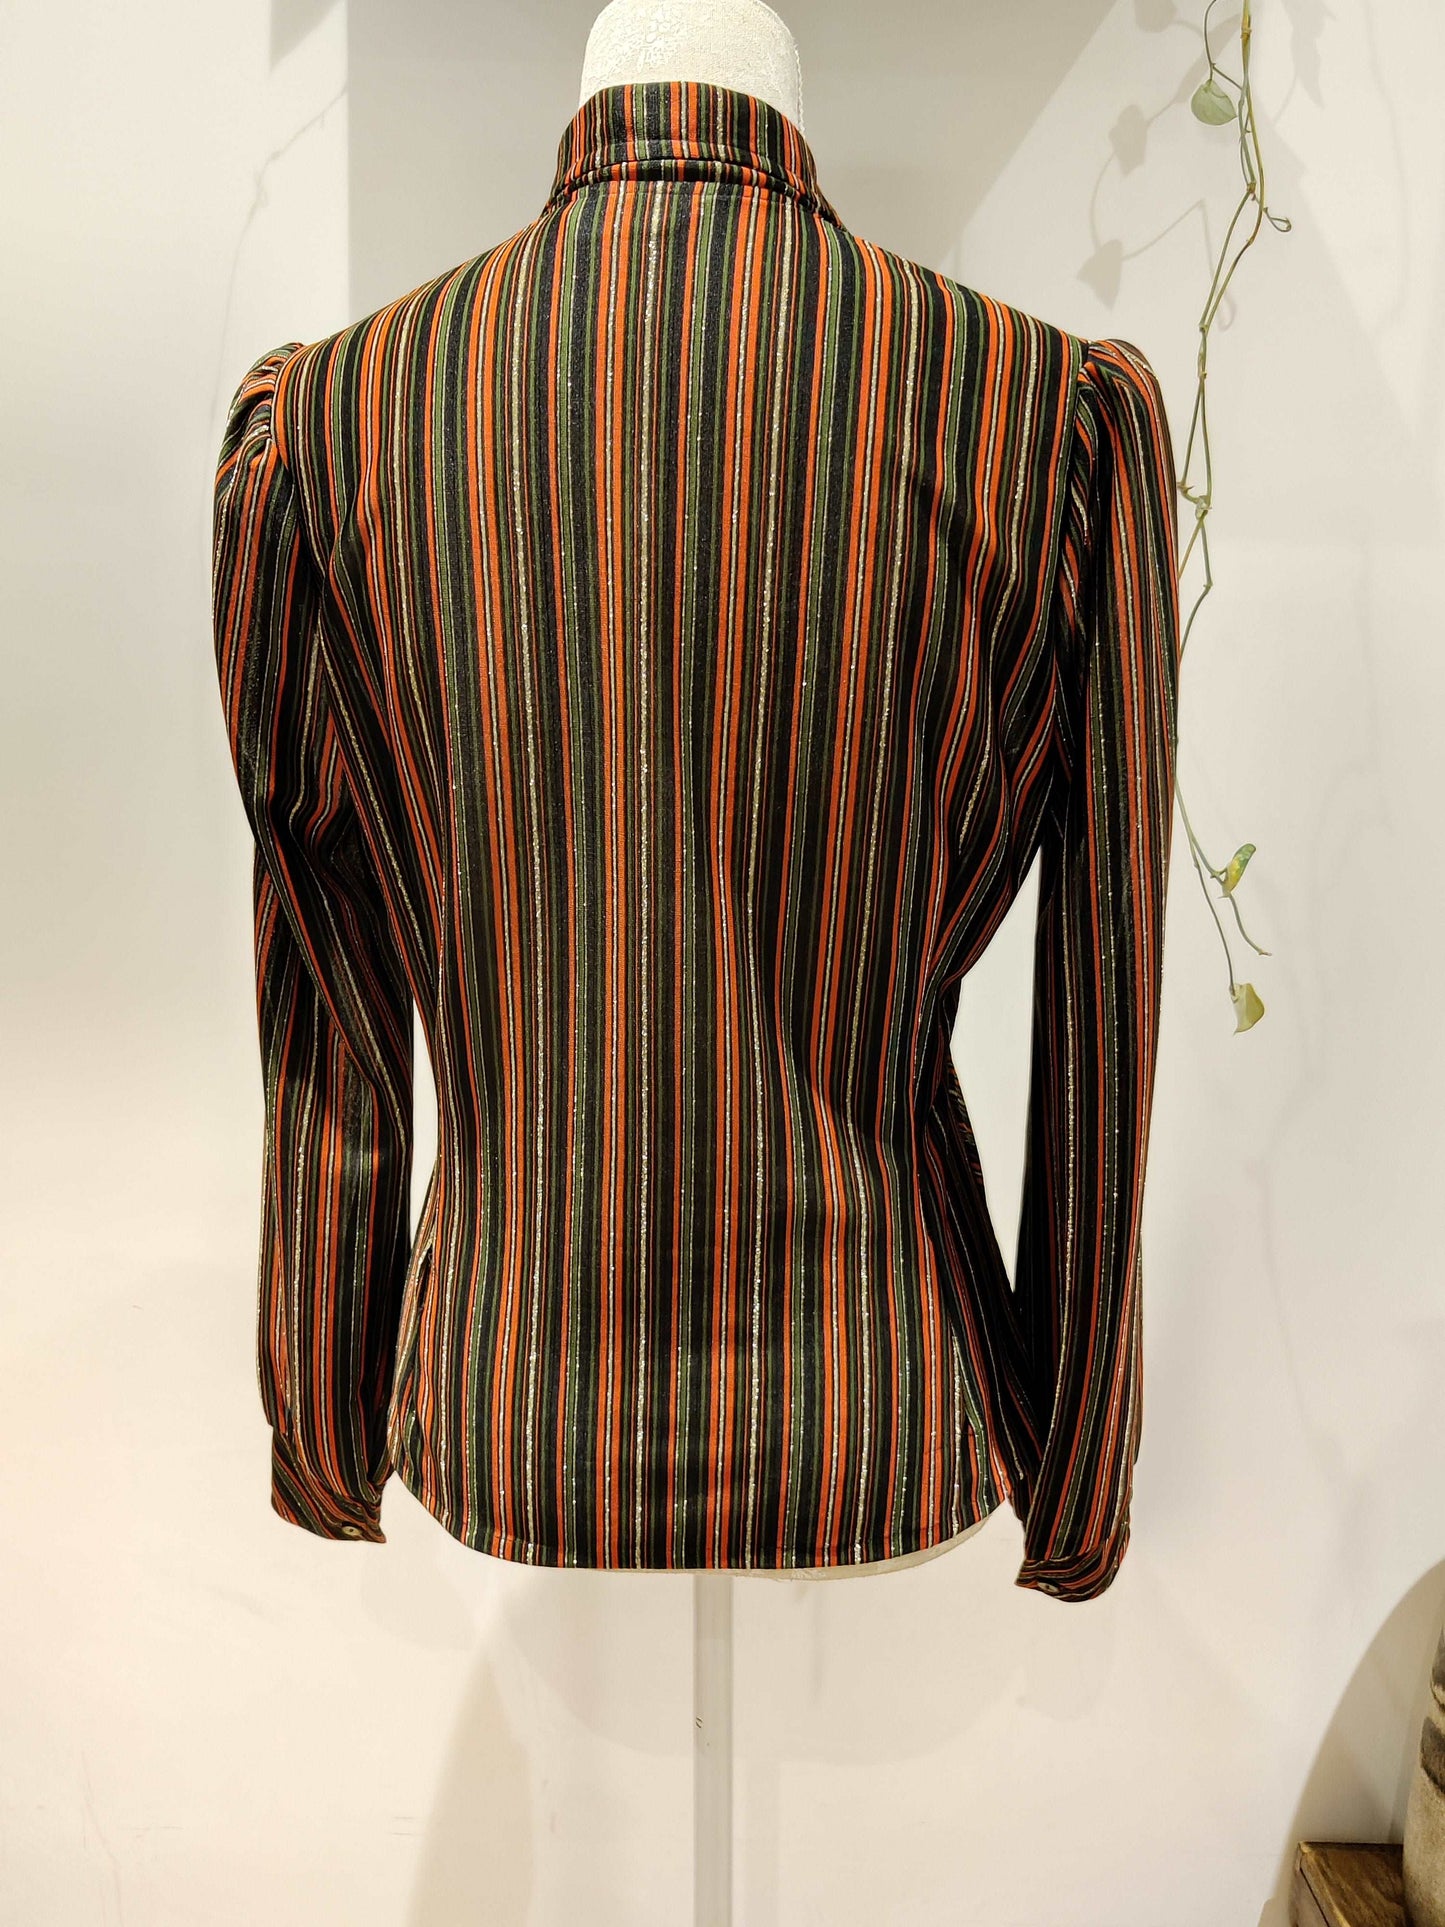 Vintage 70s shirt size 8. striped.